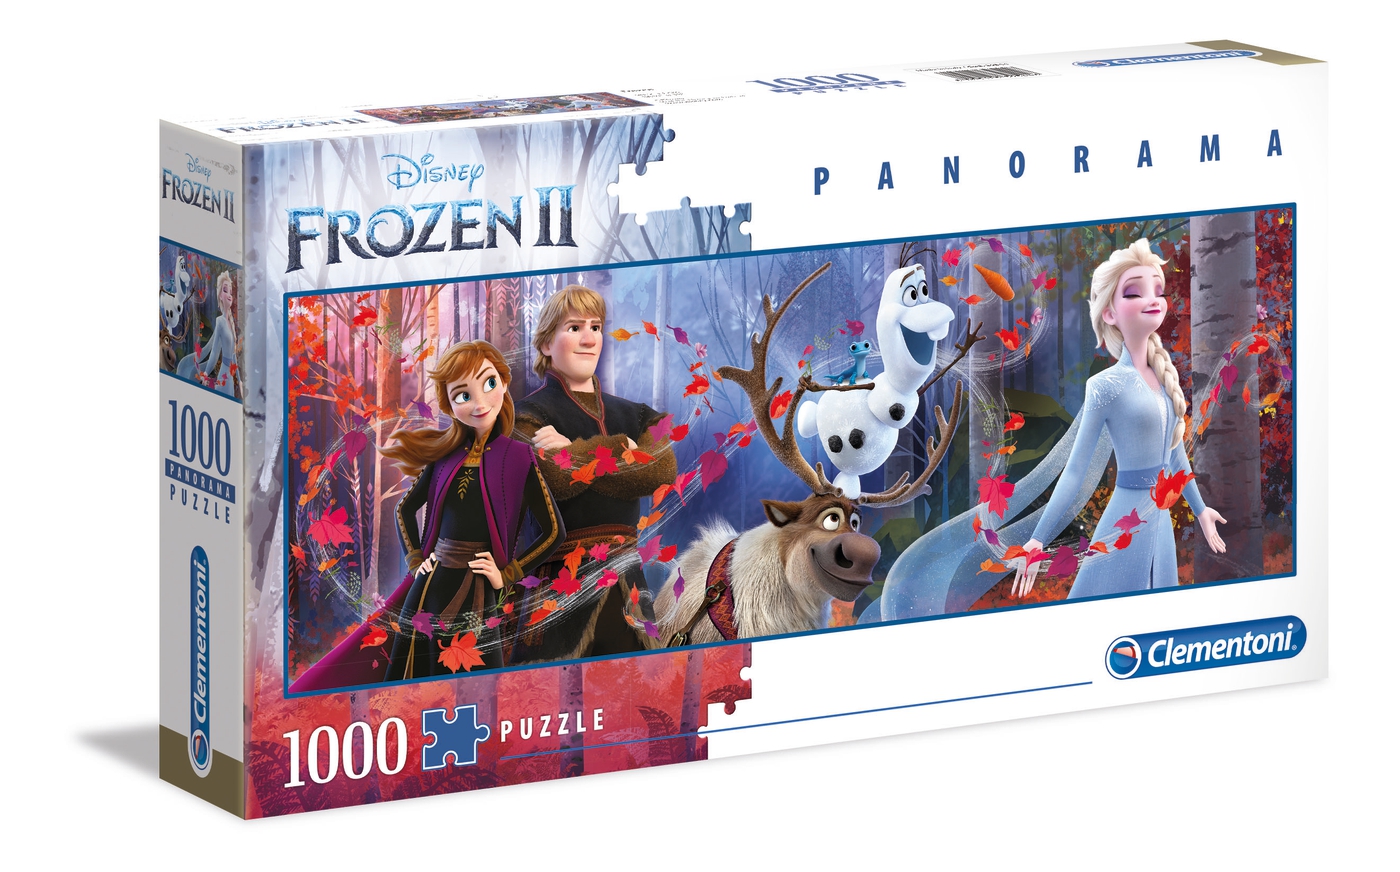 Puzzle 1000 piezas -Panorama: Frozen 2- Clementoni